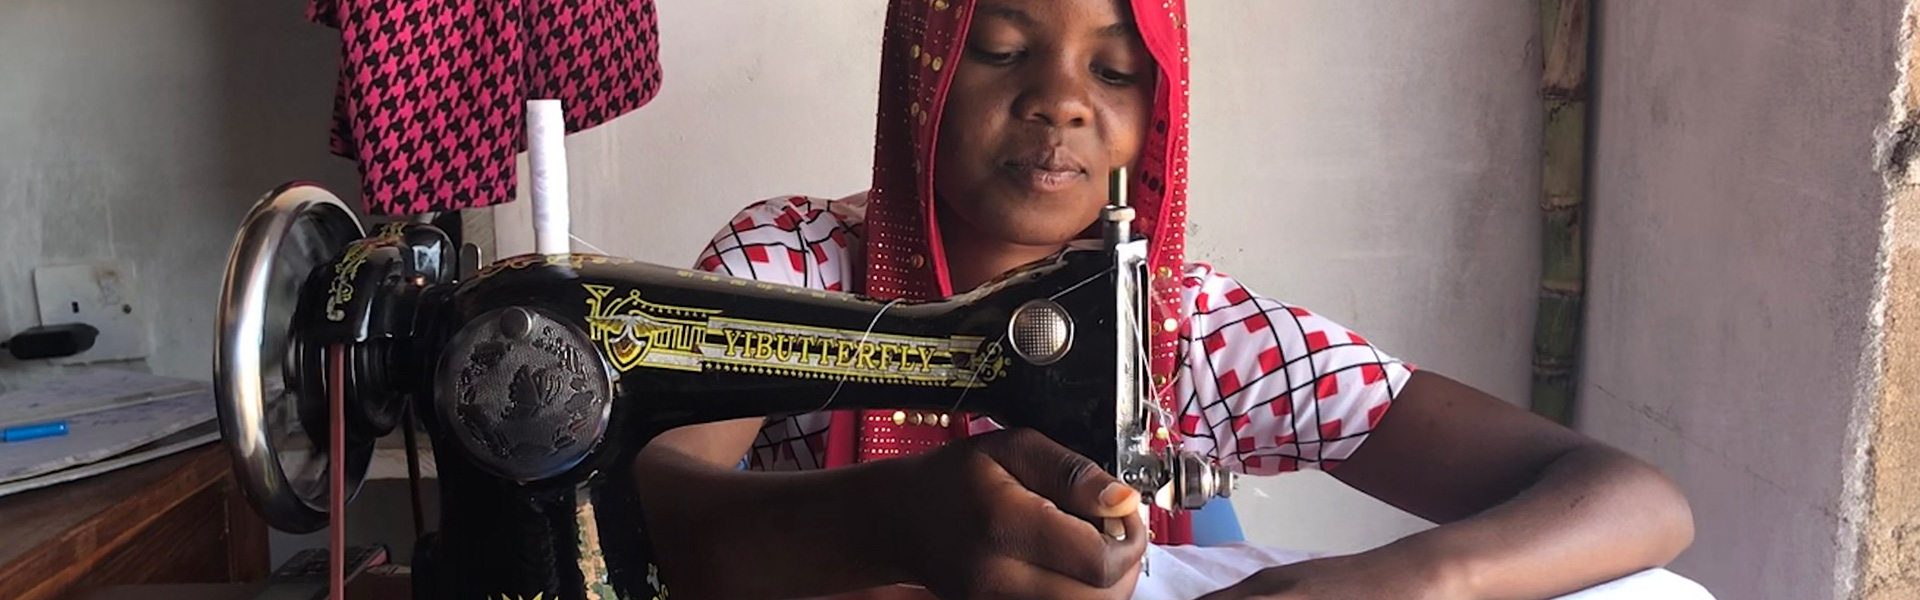 tanzania-bonga-girl-sewing-machine-photo-thea-morlandstoe